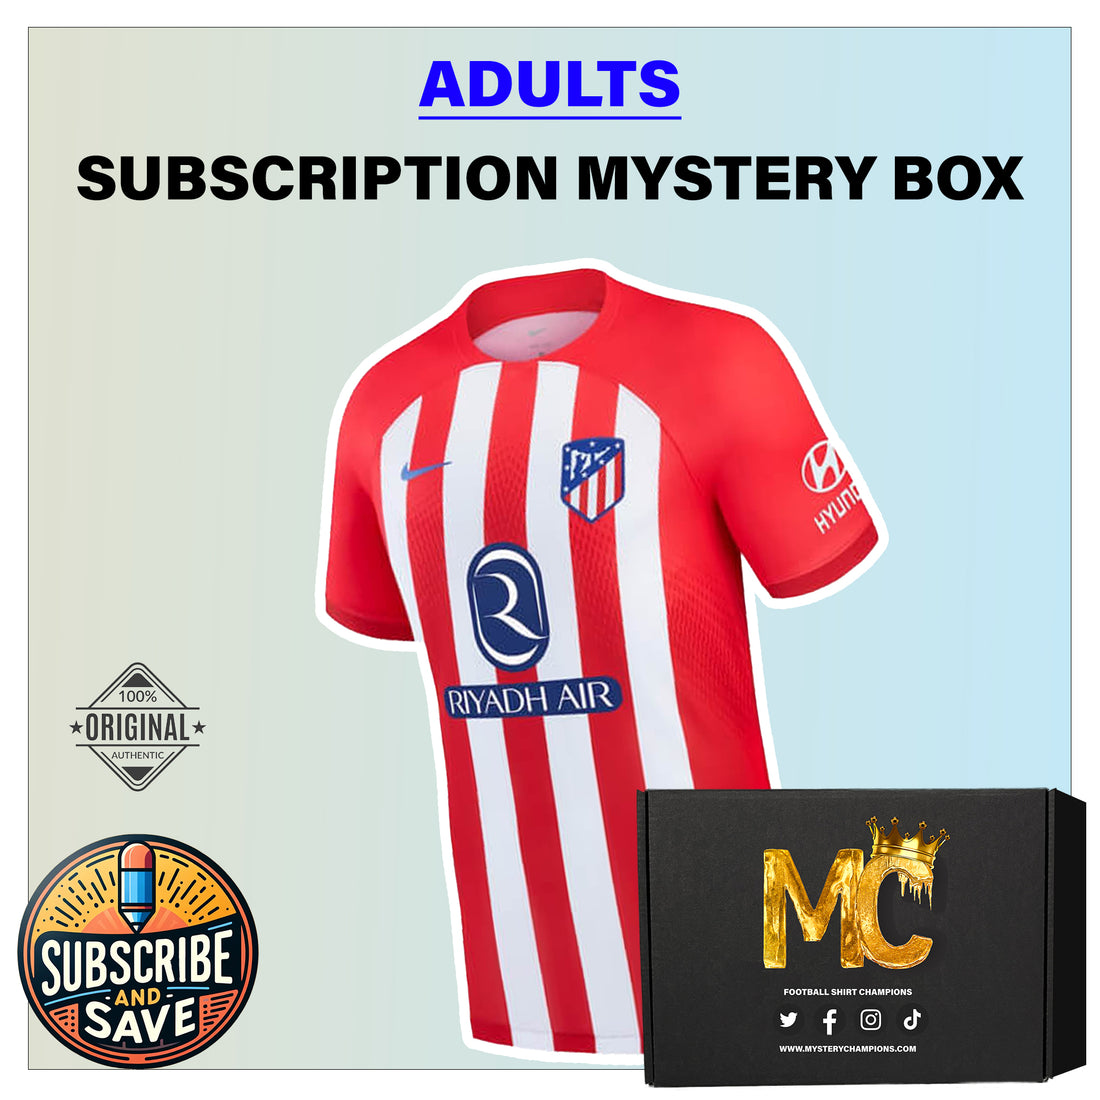 
  
  Subscription - Premium Mystery Football Shirt
  
